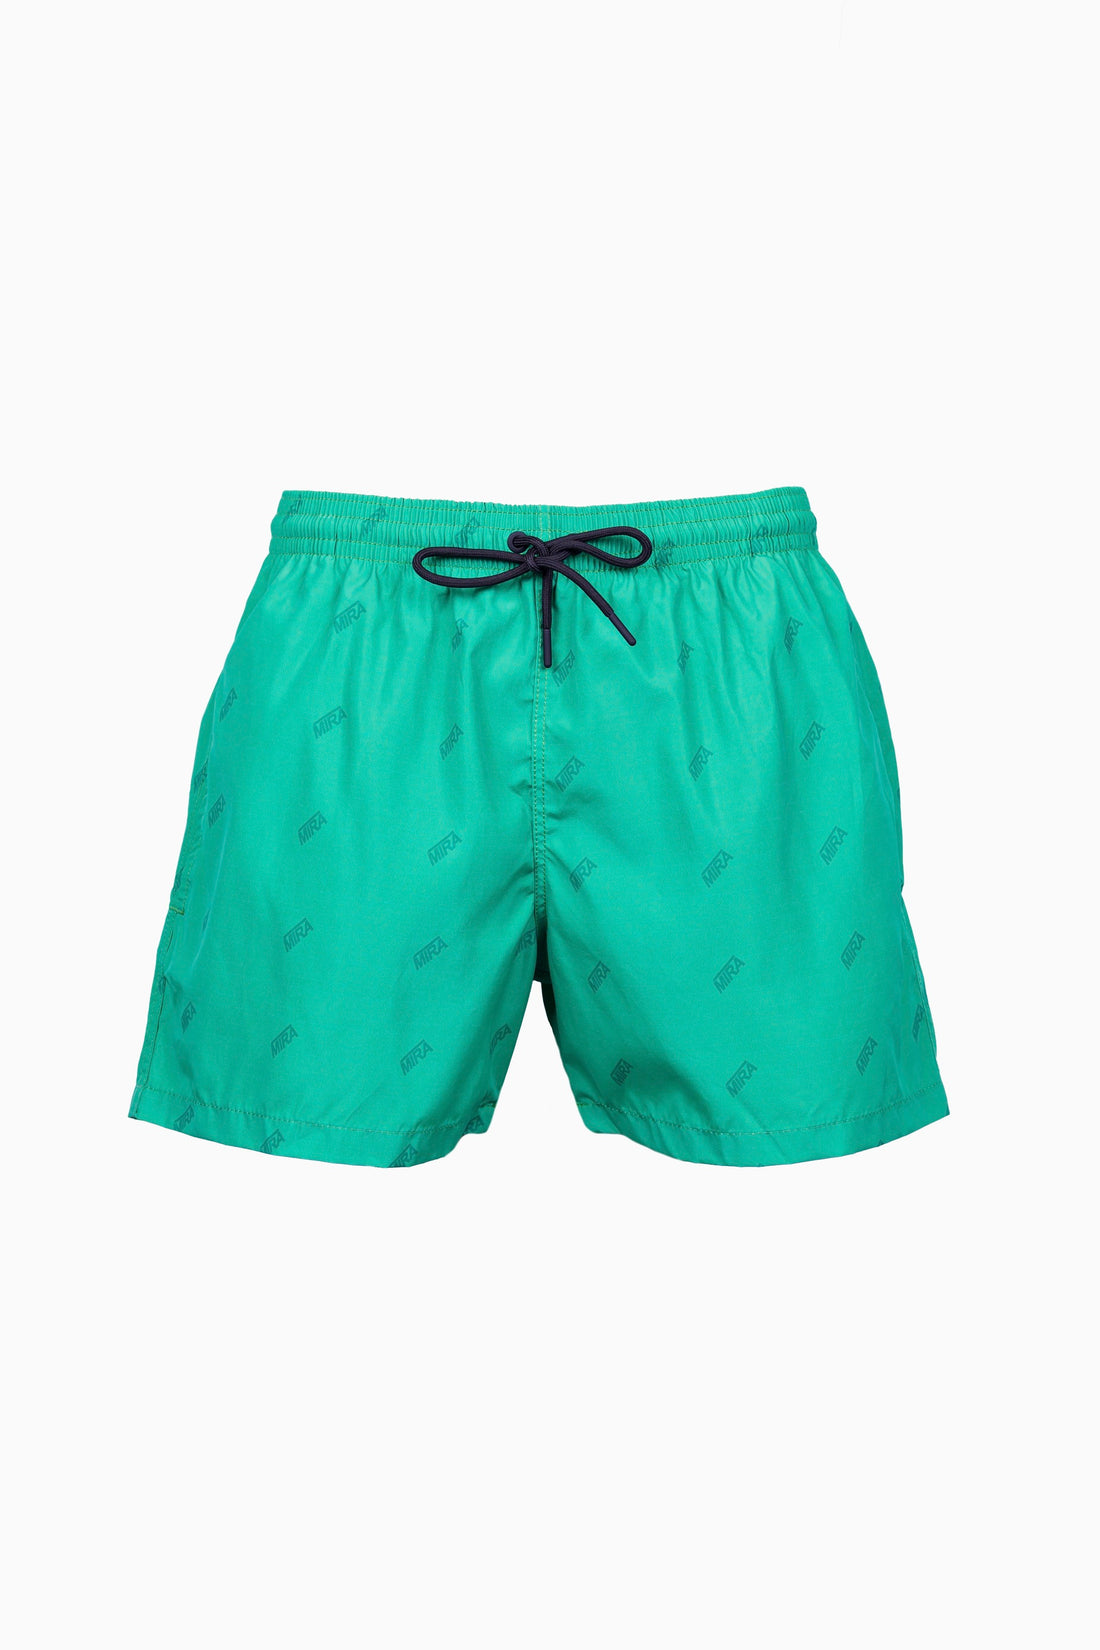 Swimsuit Monochrome Green